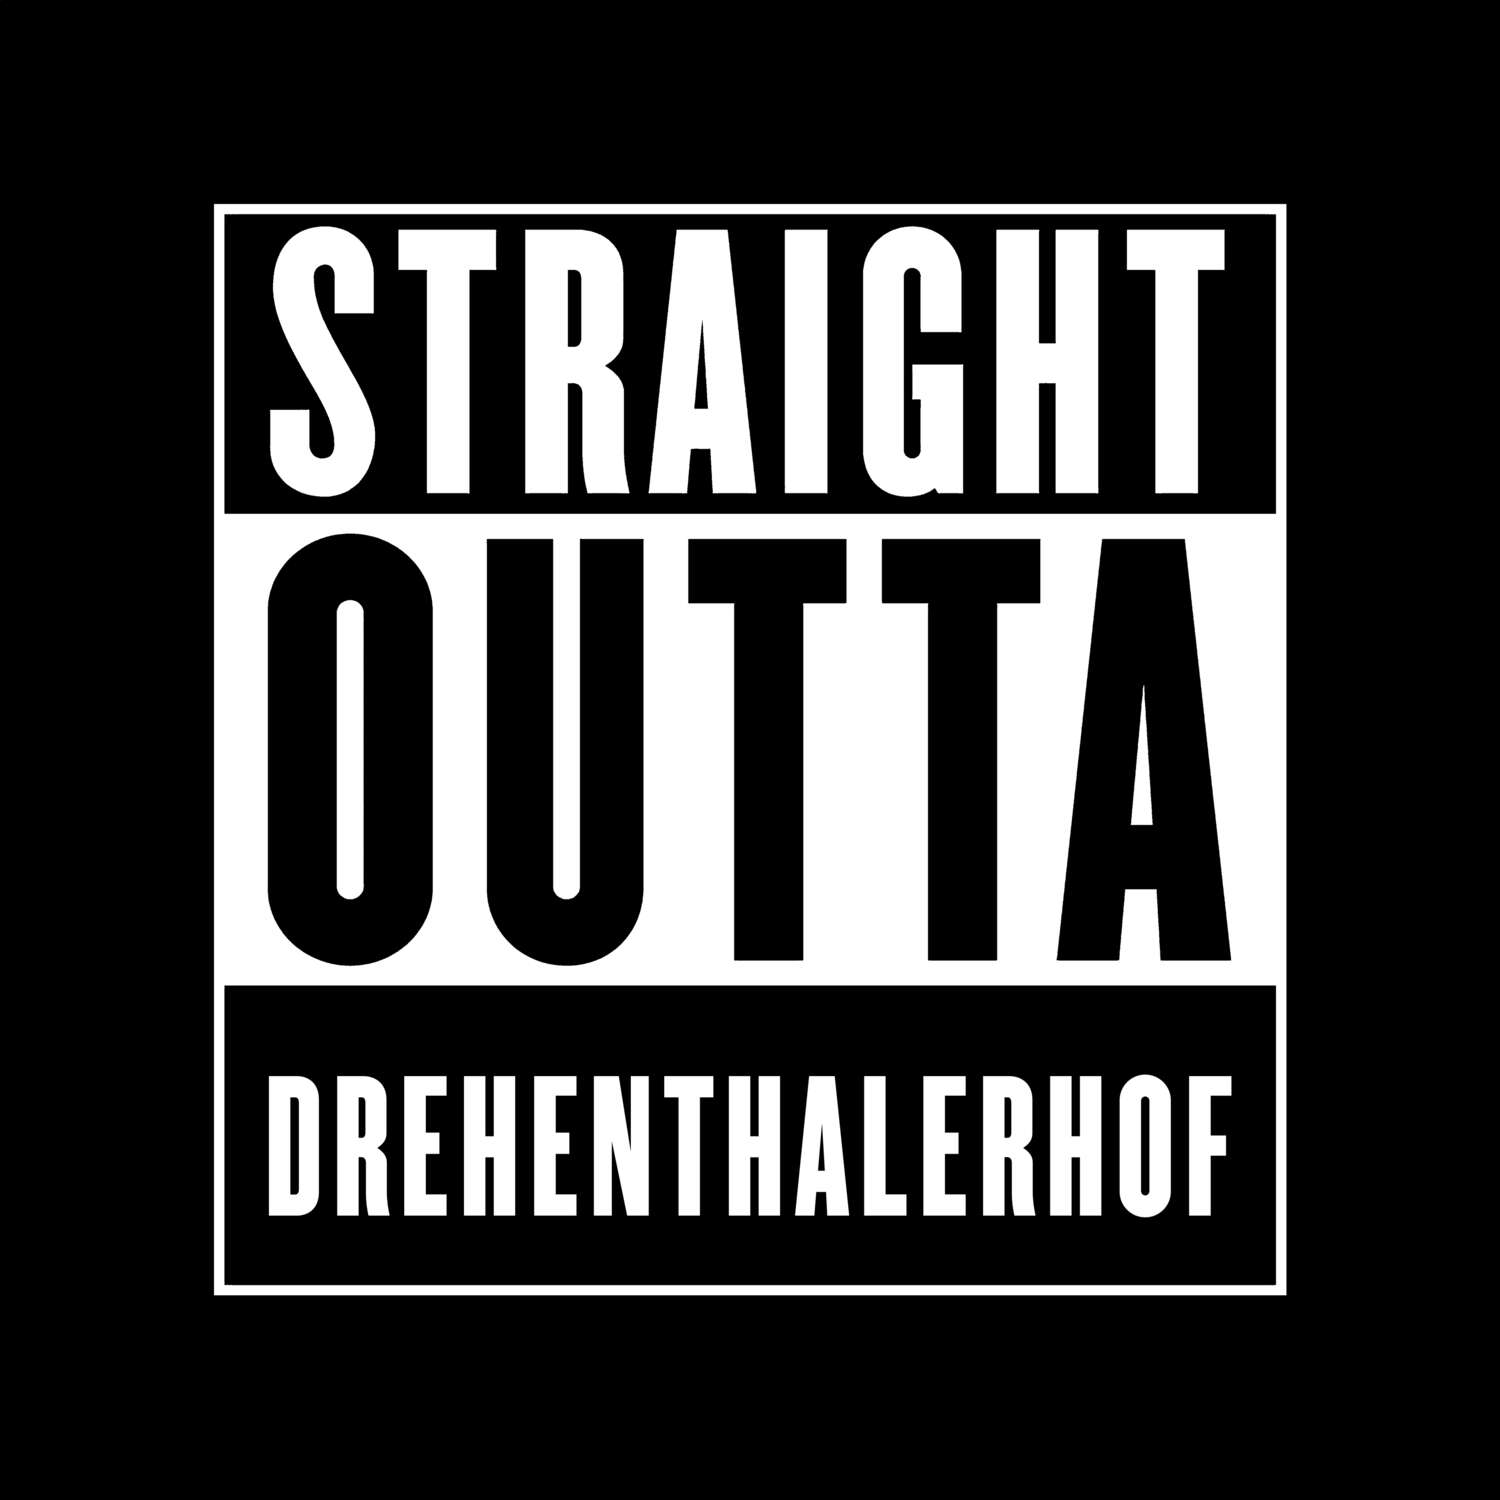 Drehenthalerhof T-Shirt »Straight Outta«